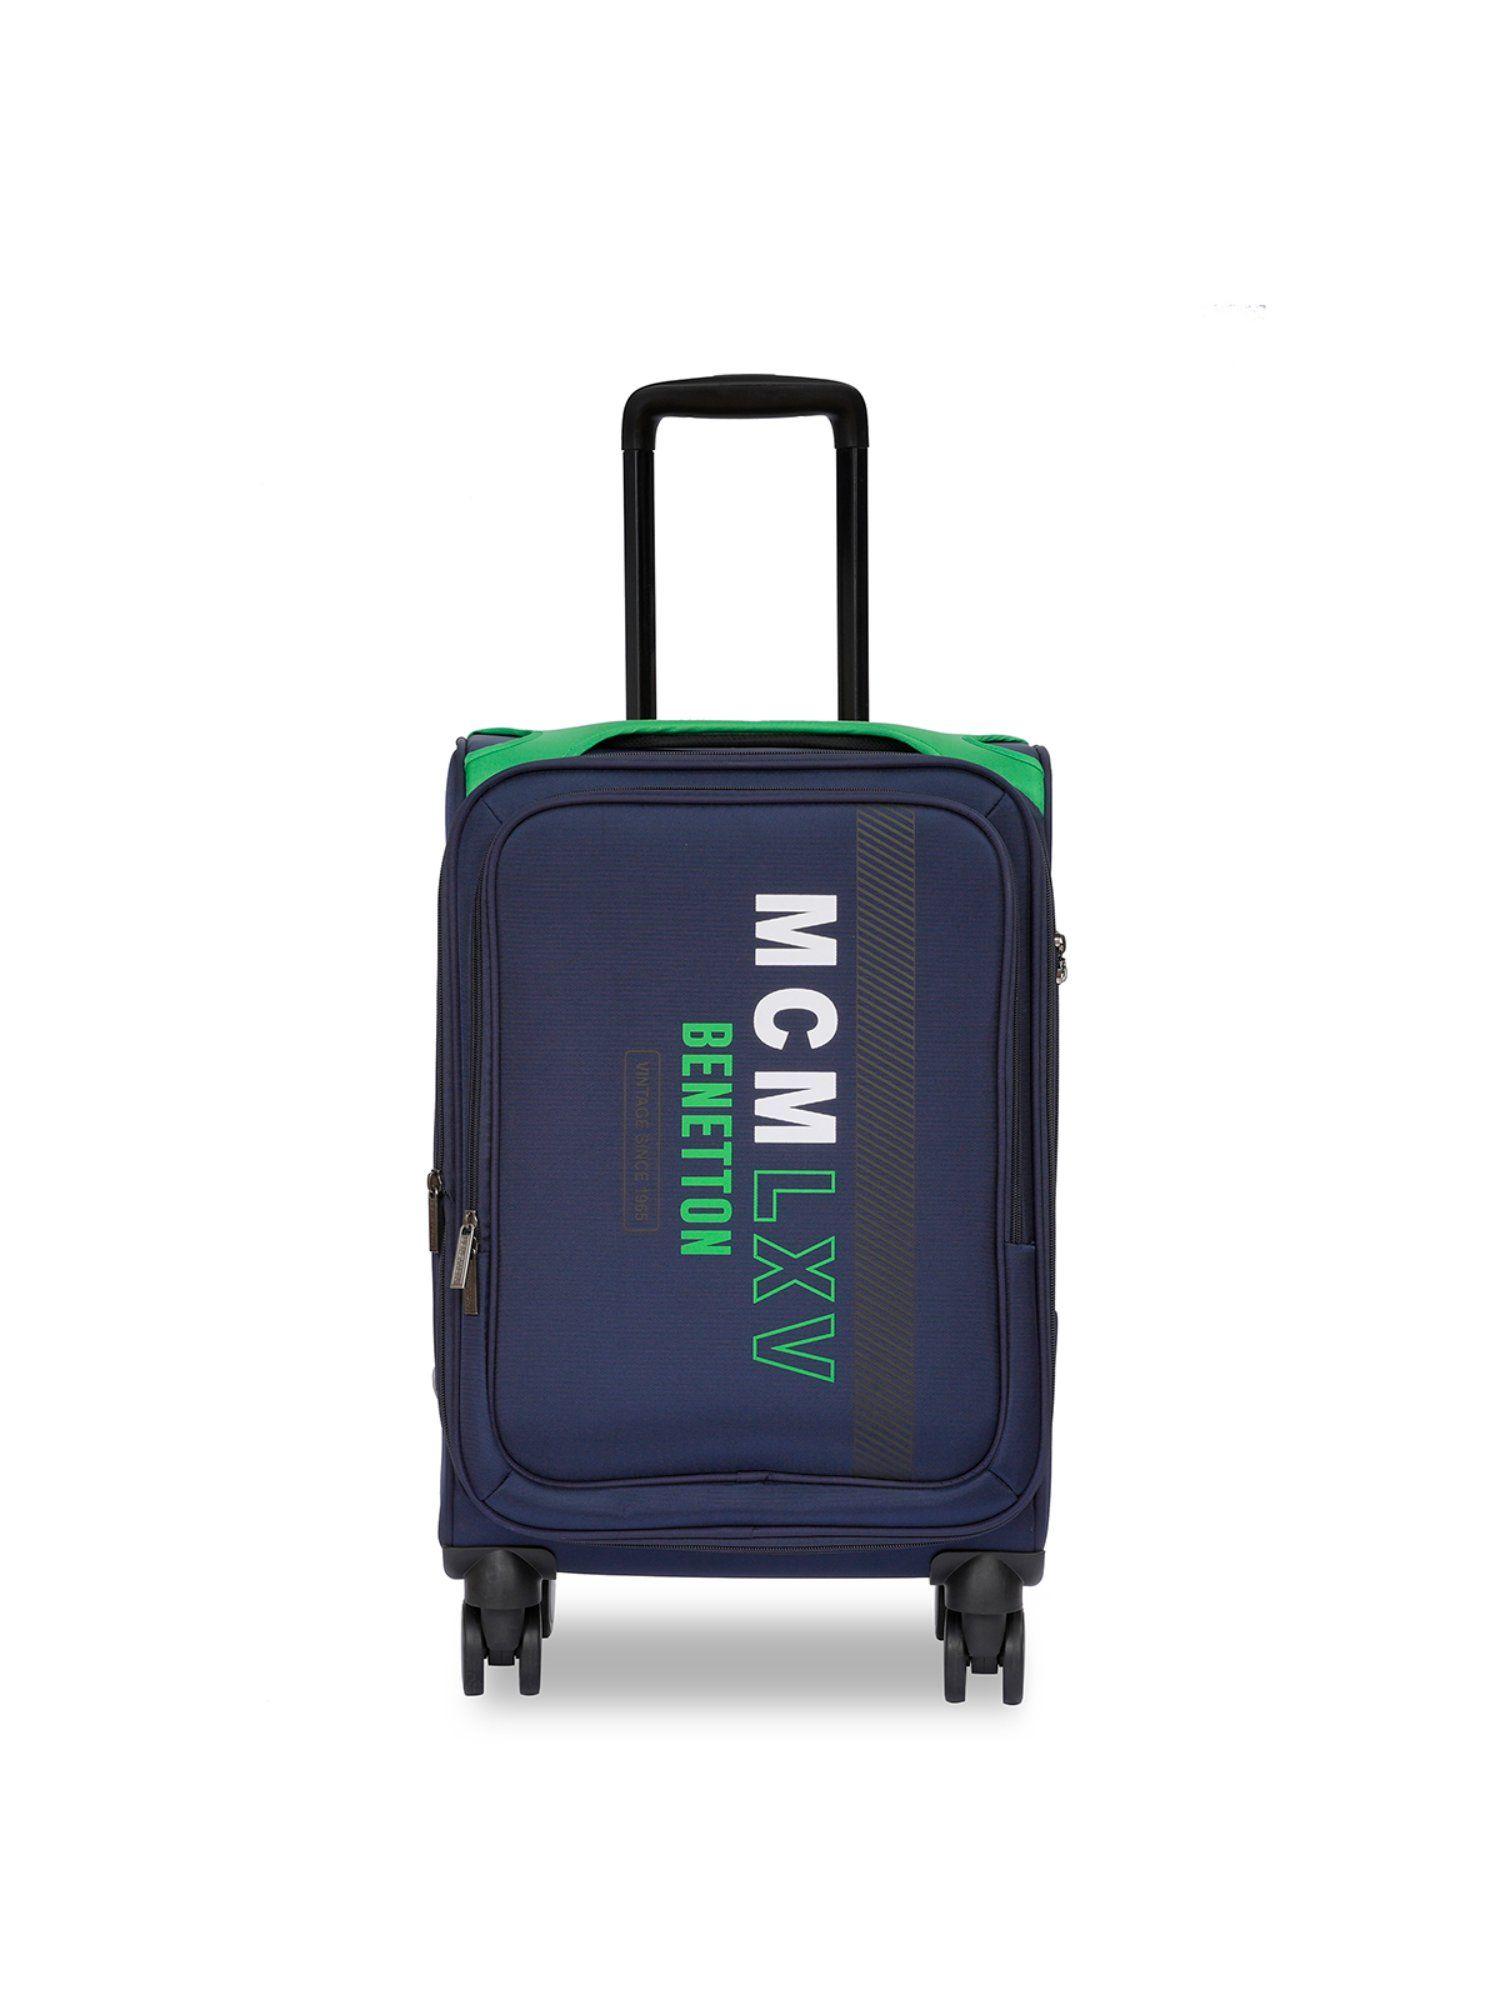 topaz unisex polyester soft luggage - navy, 58.5 cm mid trolley bag